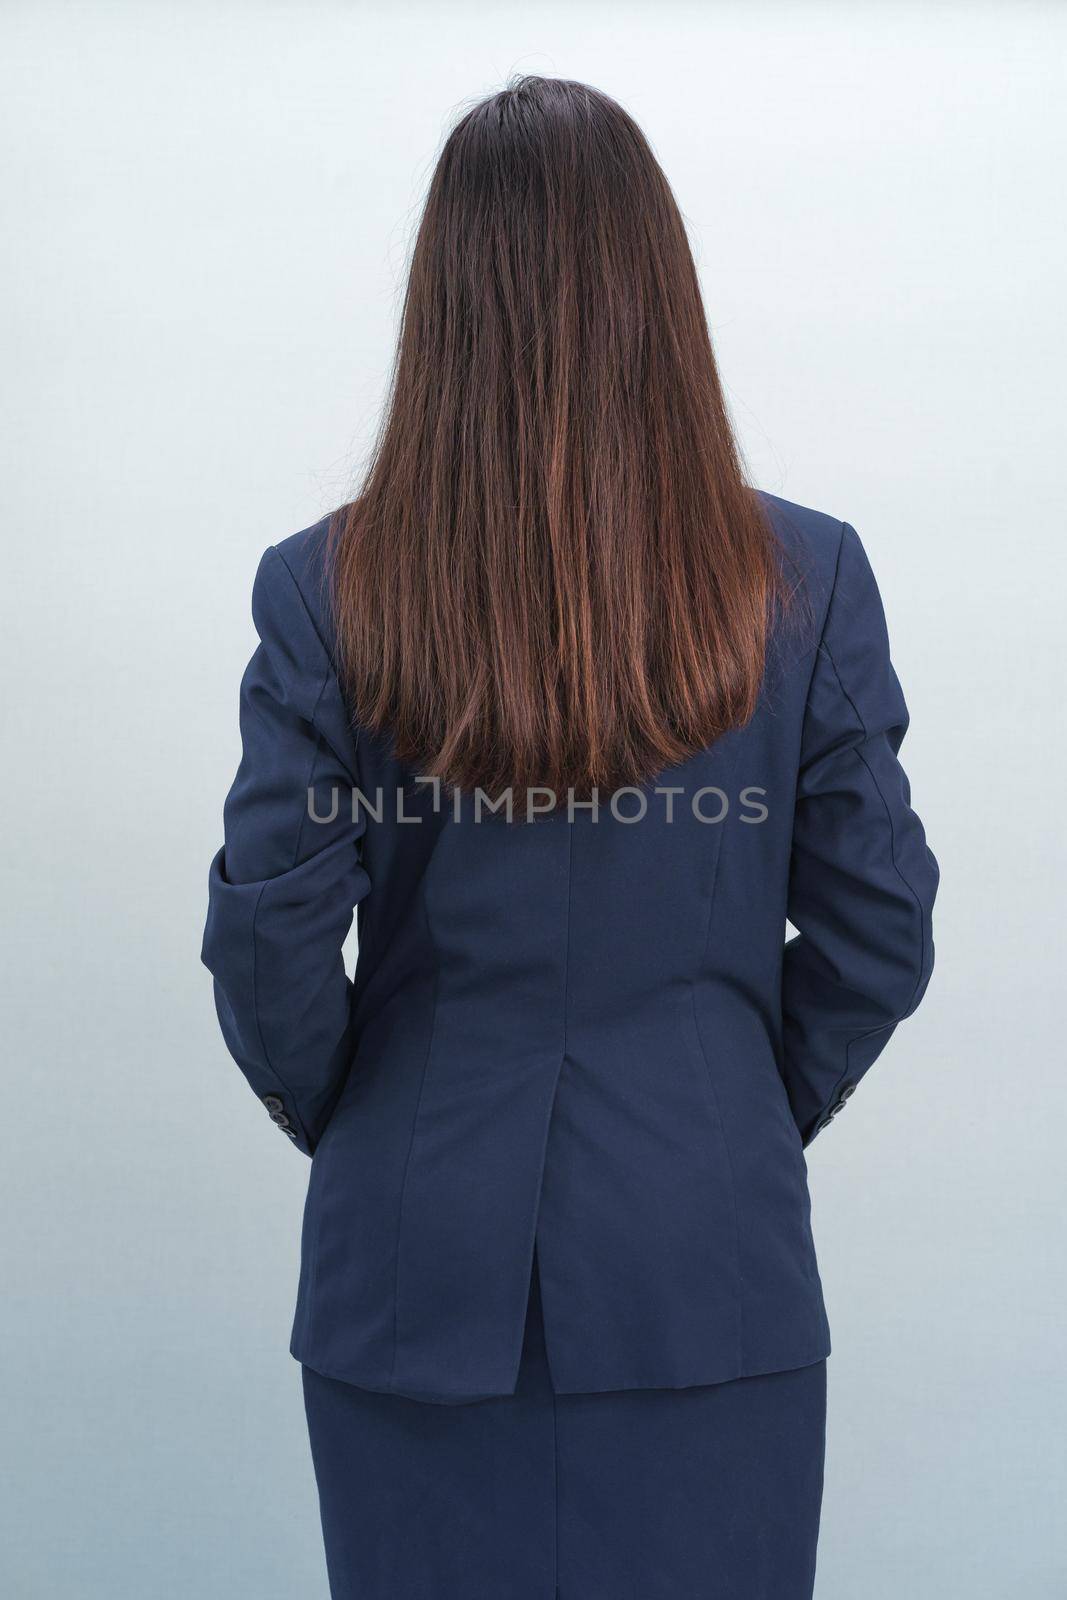 Women wearing a suit in studio from behind by stoonn